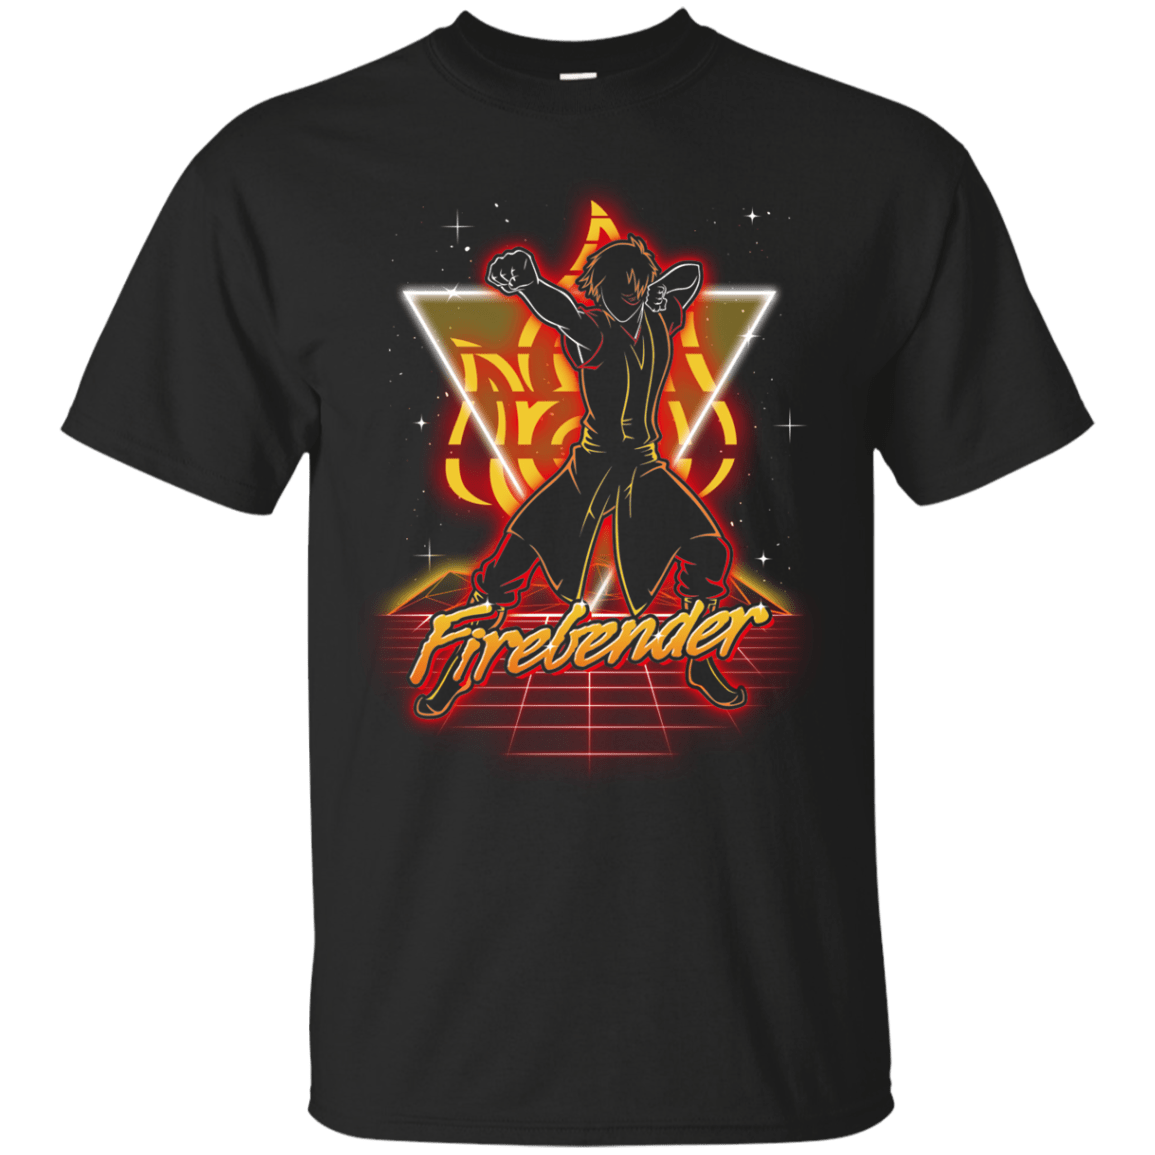 Retro Firebender T-Shirt